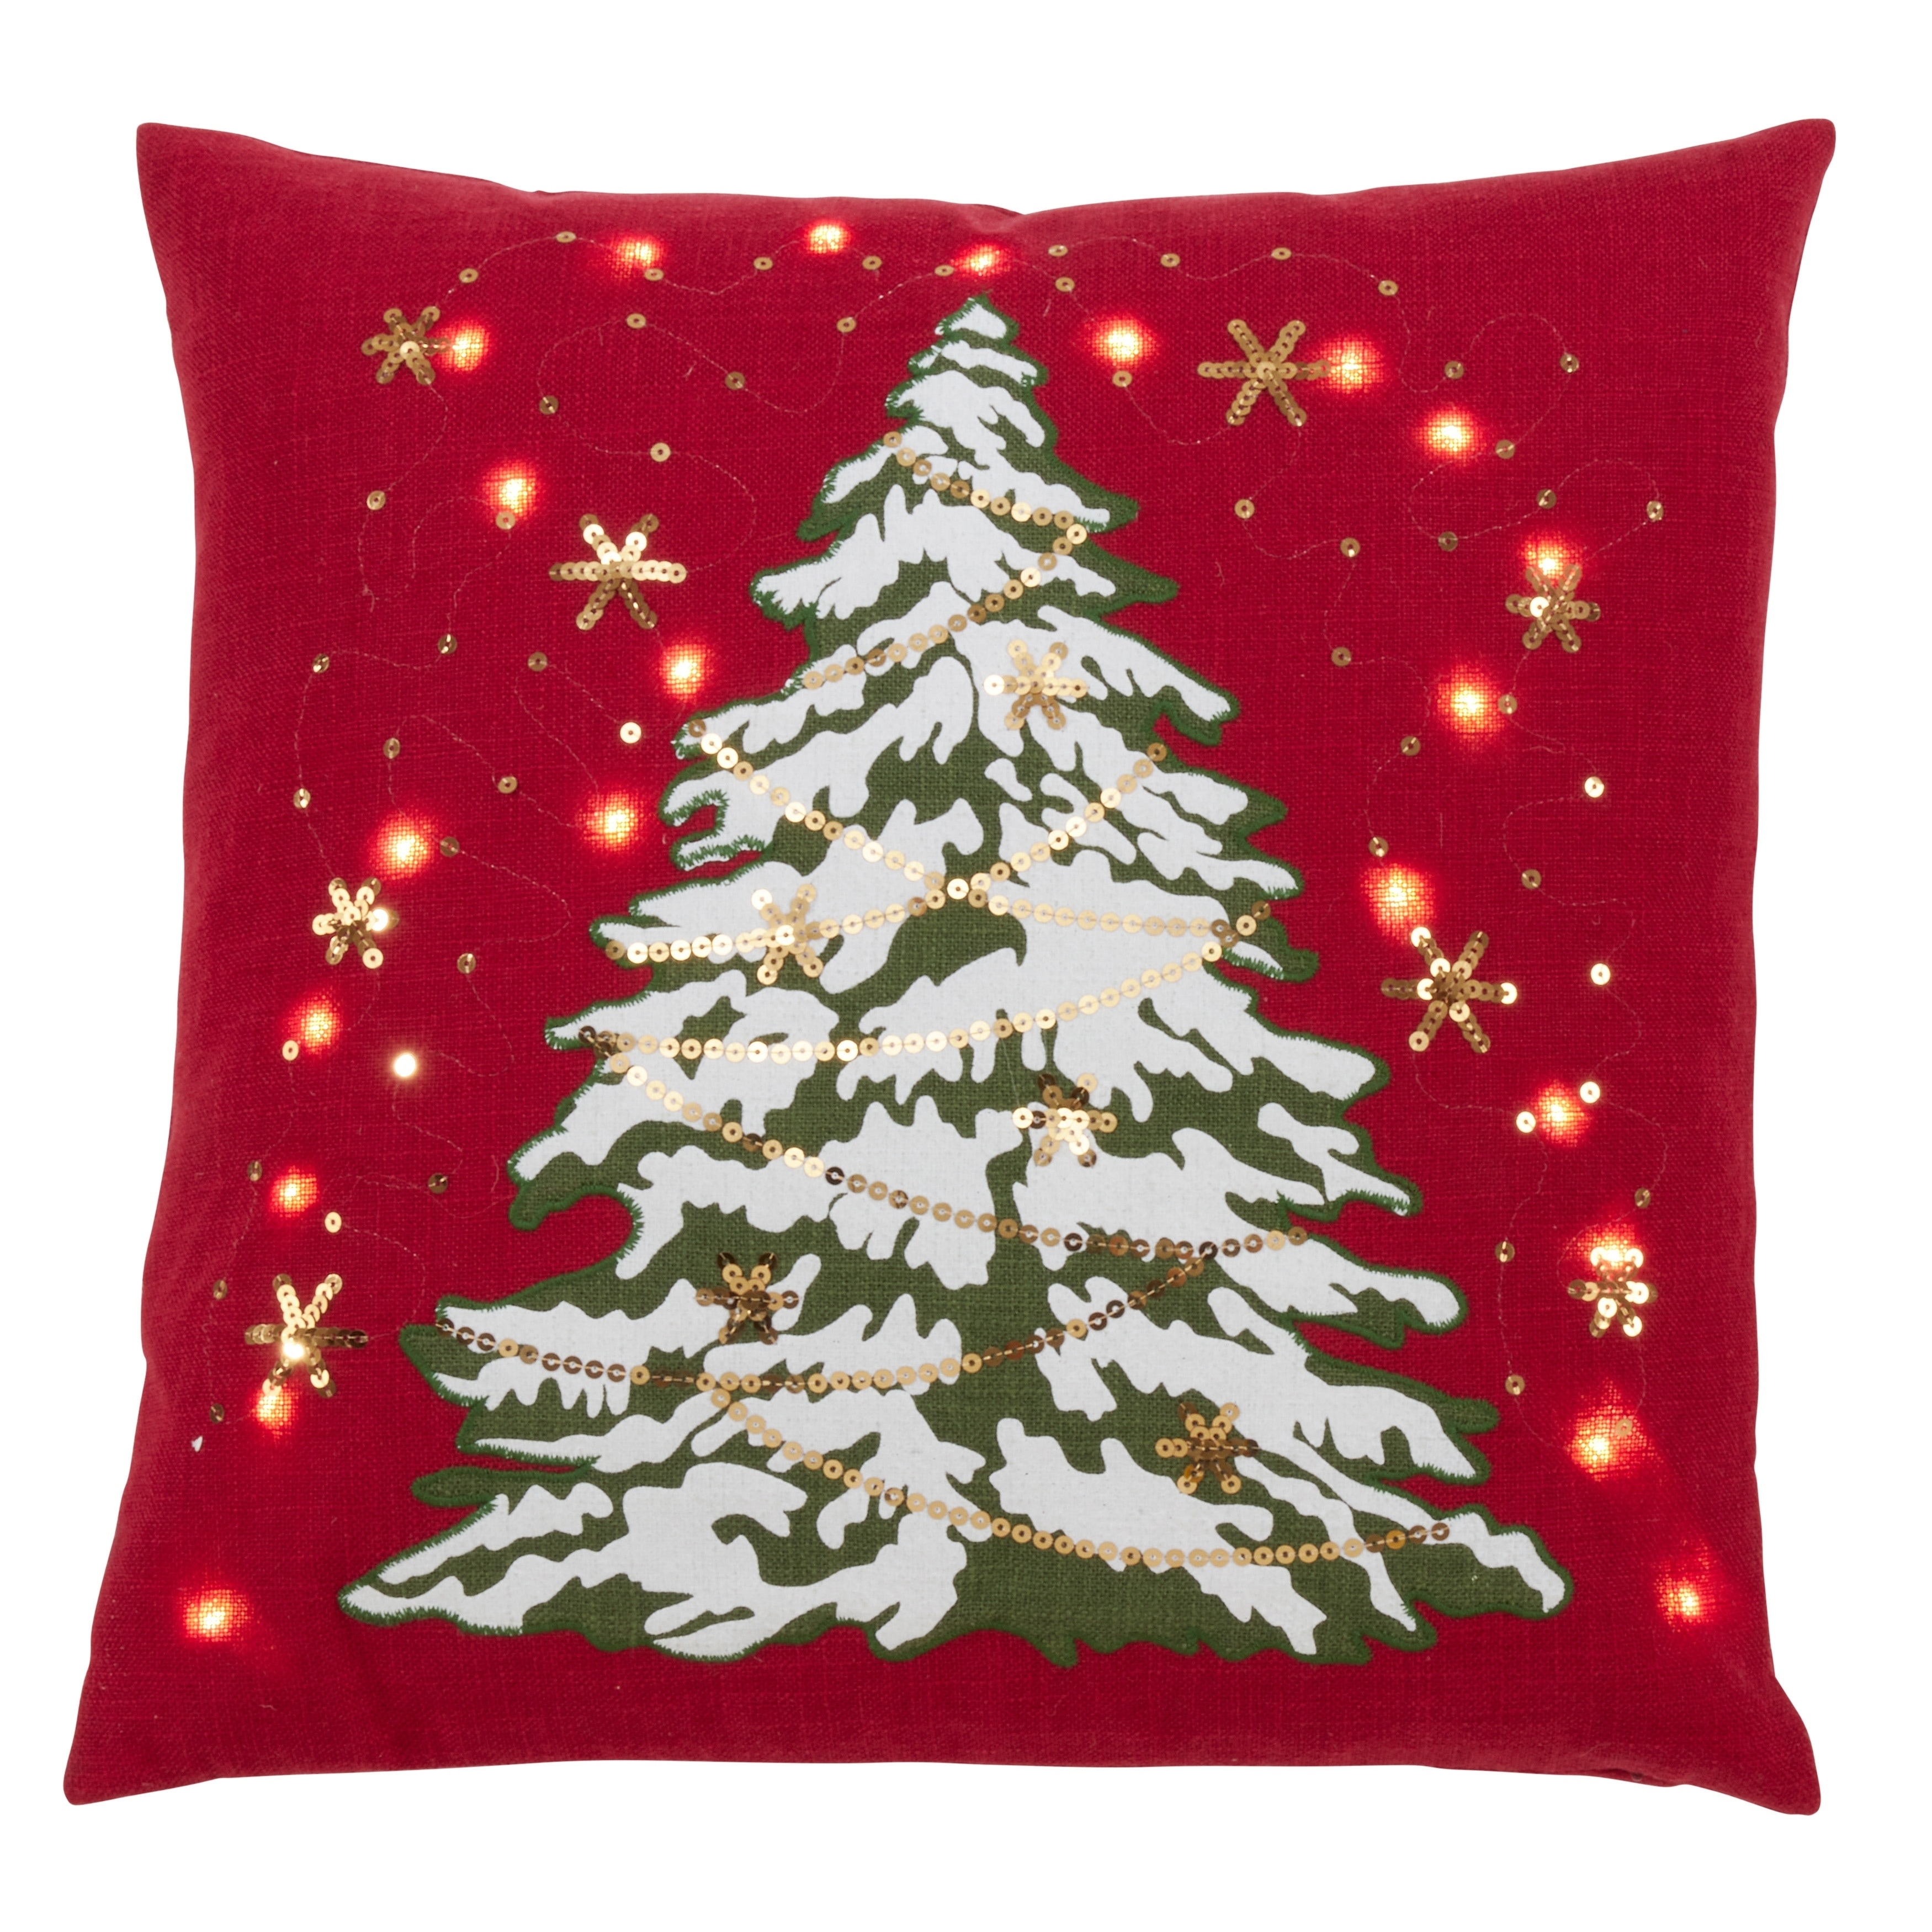 Christmas Tree Throw Pillow With LED Lights - On Sale - Bed Bath & Beyond -  29826748